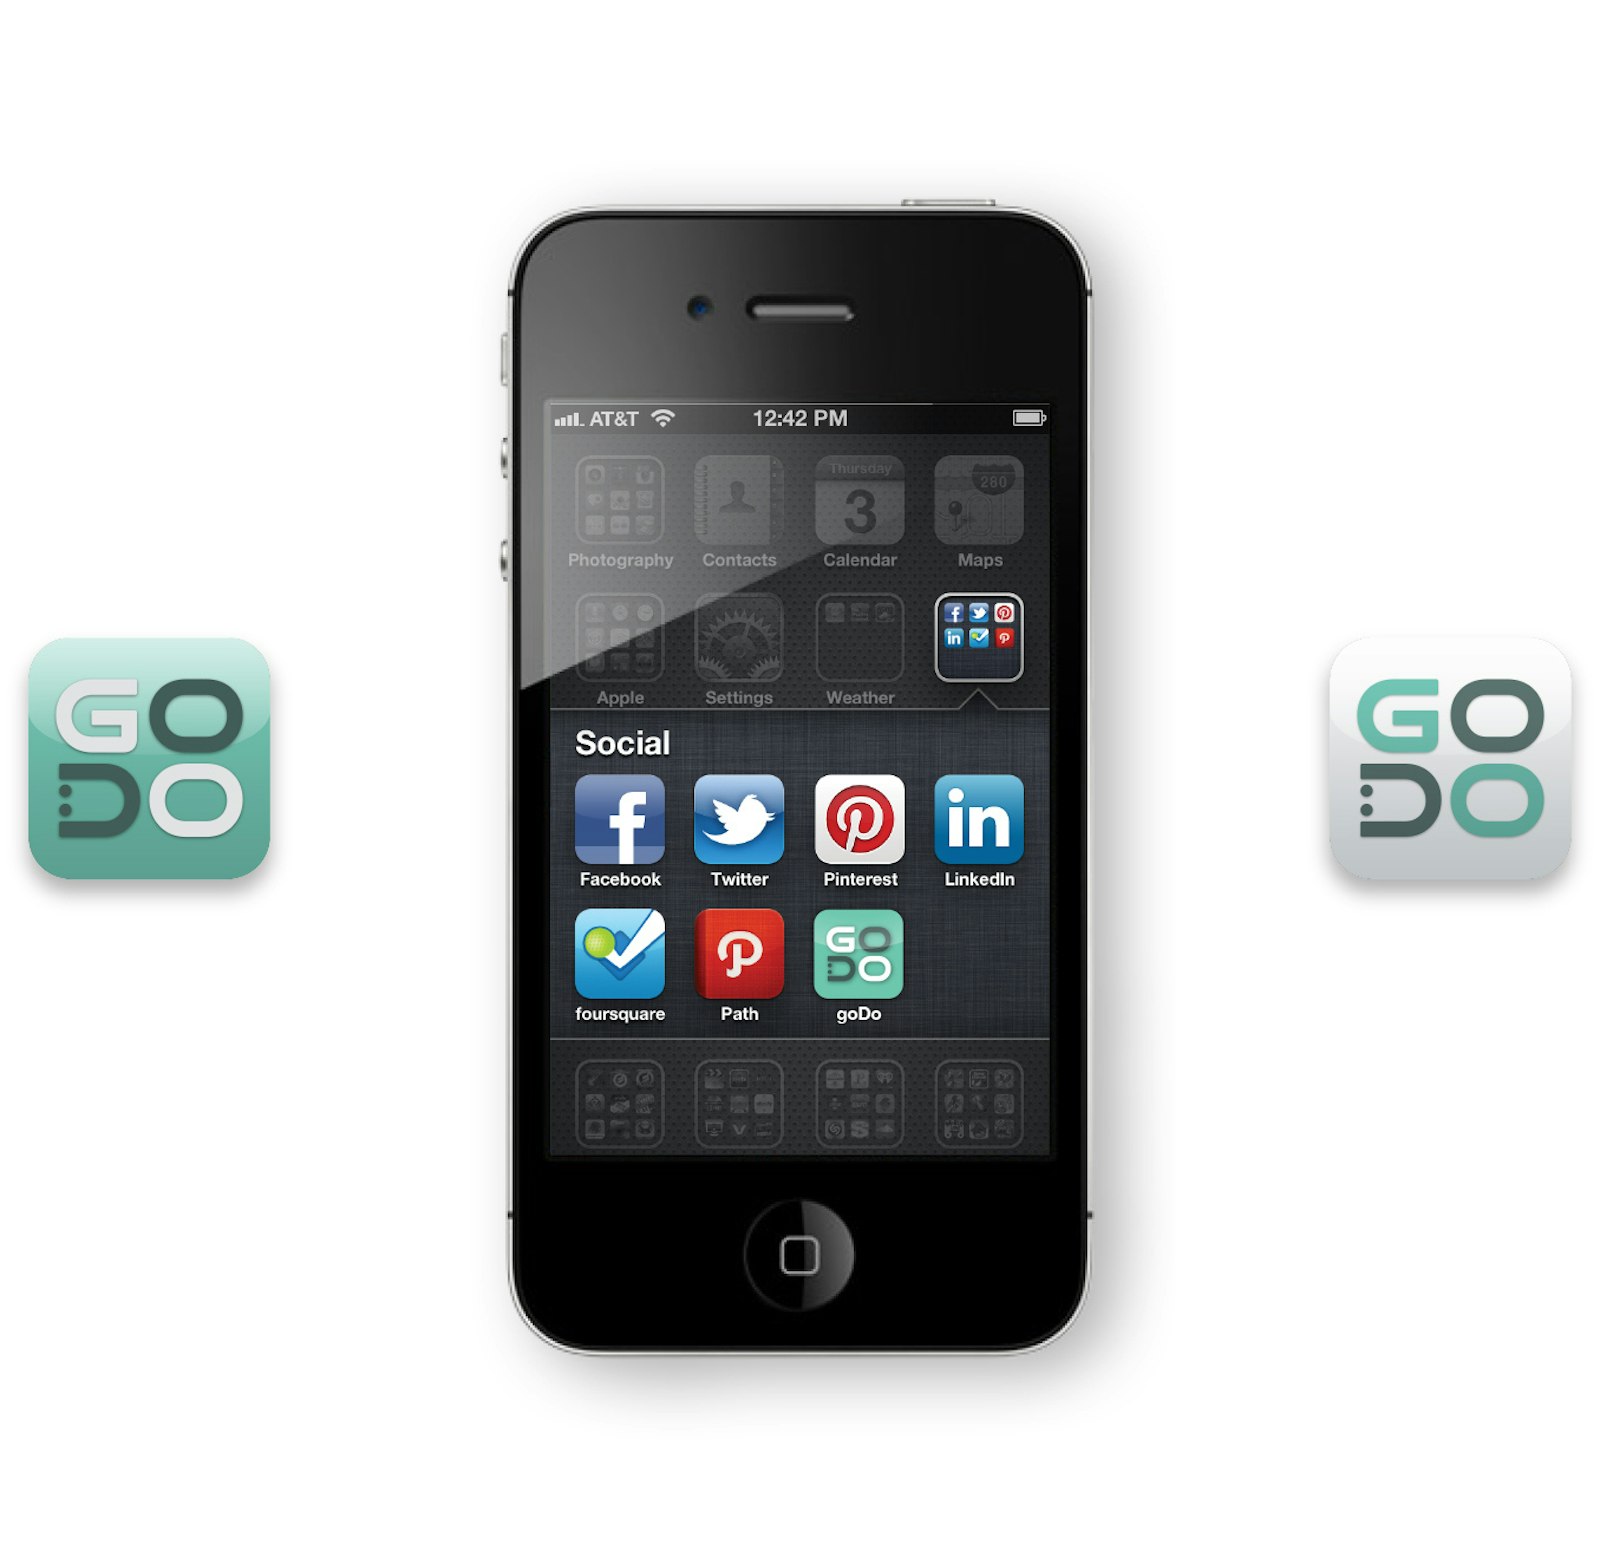 Mobile phone app icon design and logo for GoDo brand.